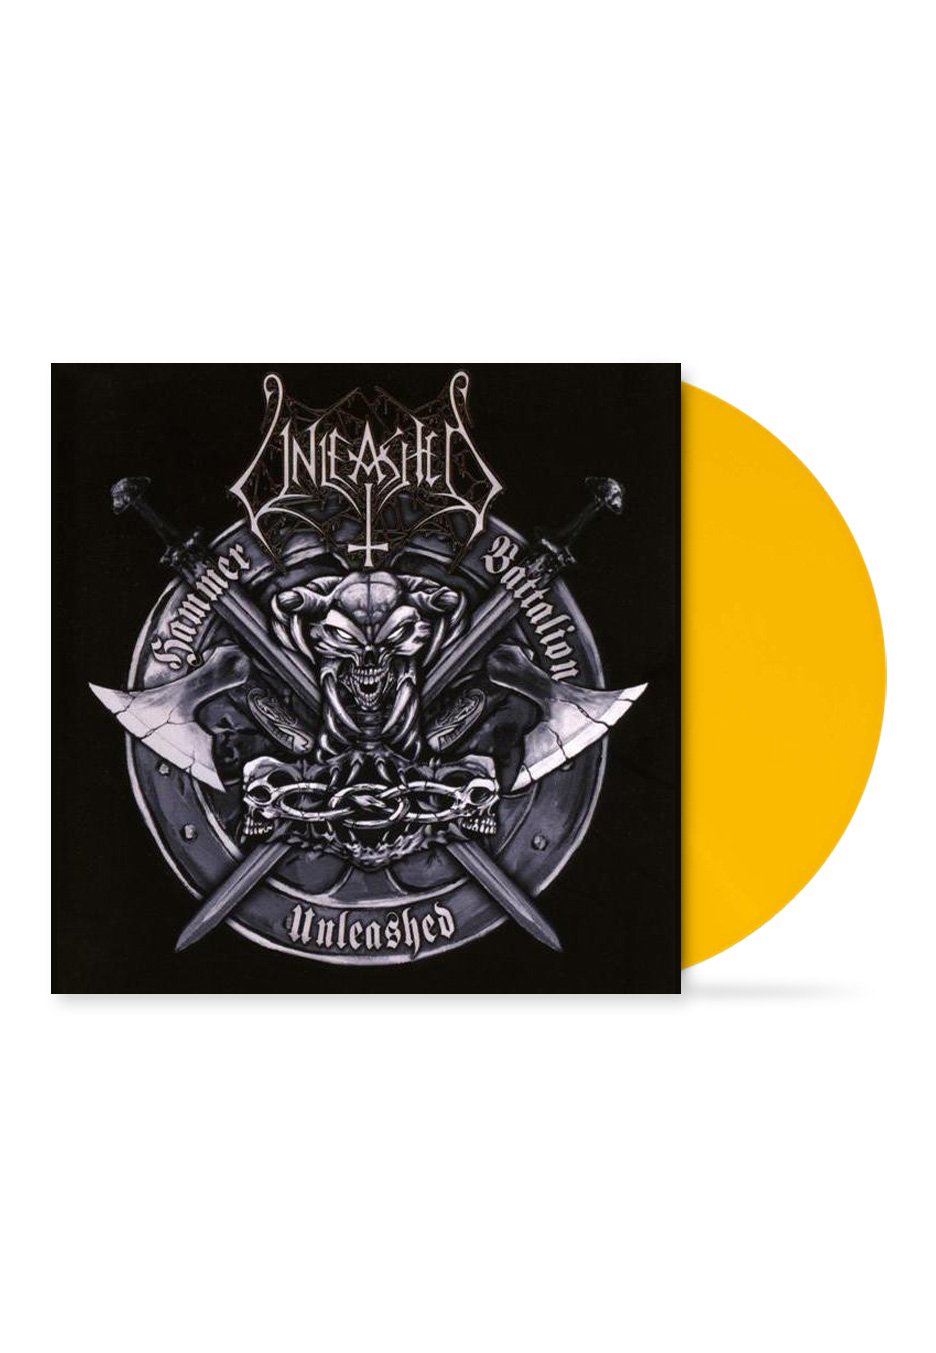 Unleashed - Hammer Battalion Ltd. Yellow - Colored Vinyl